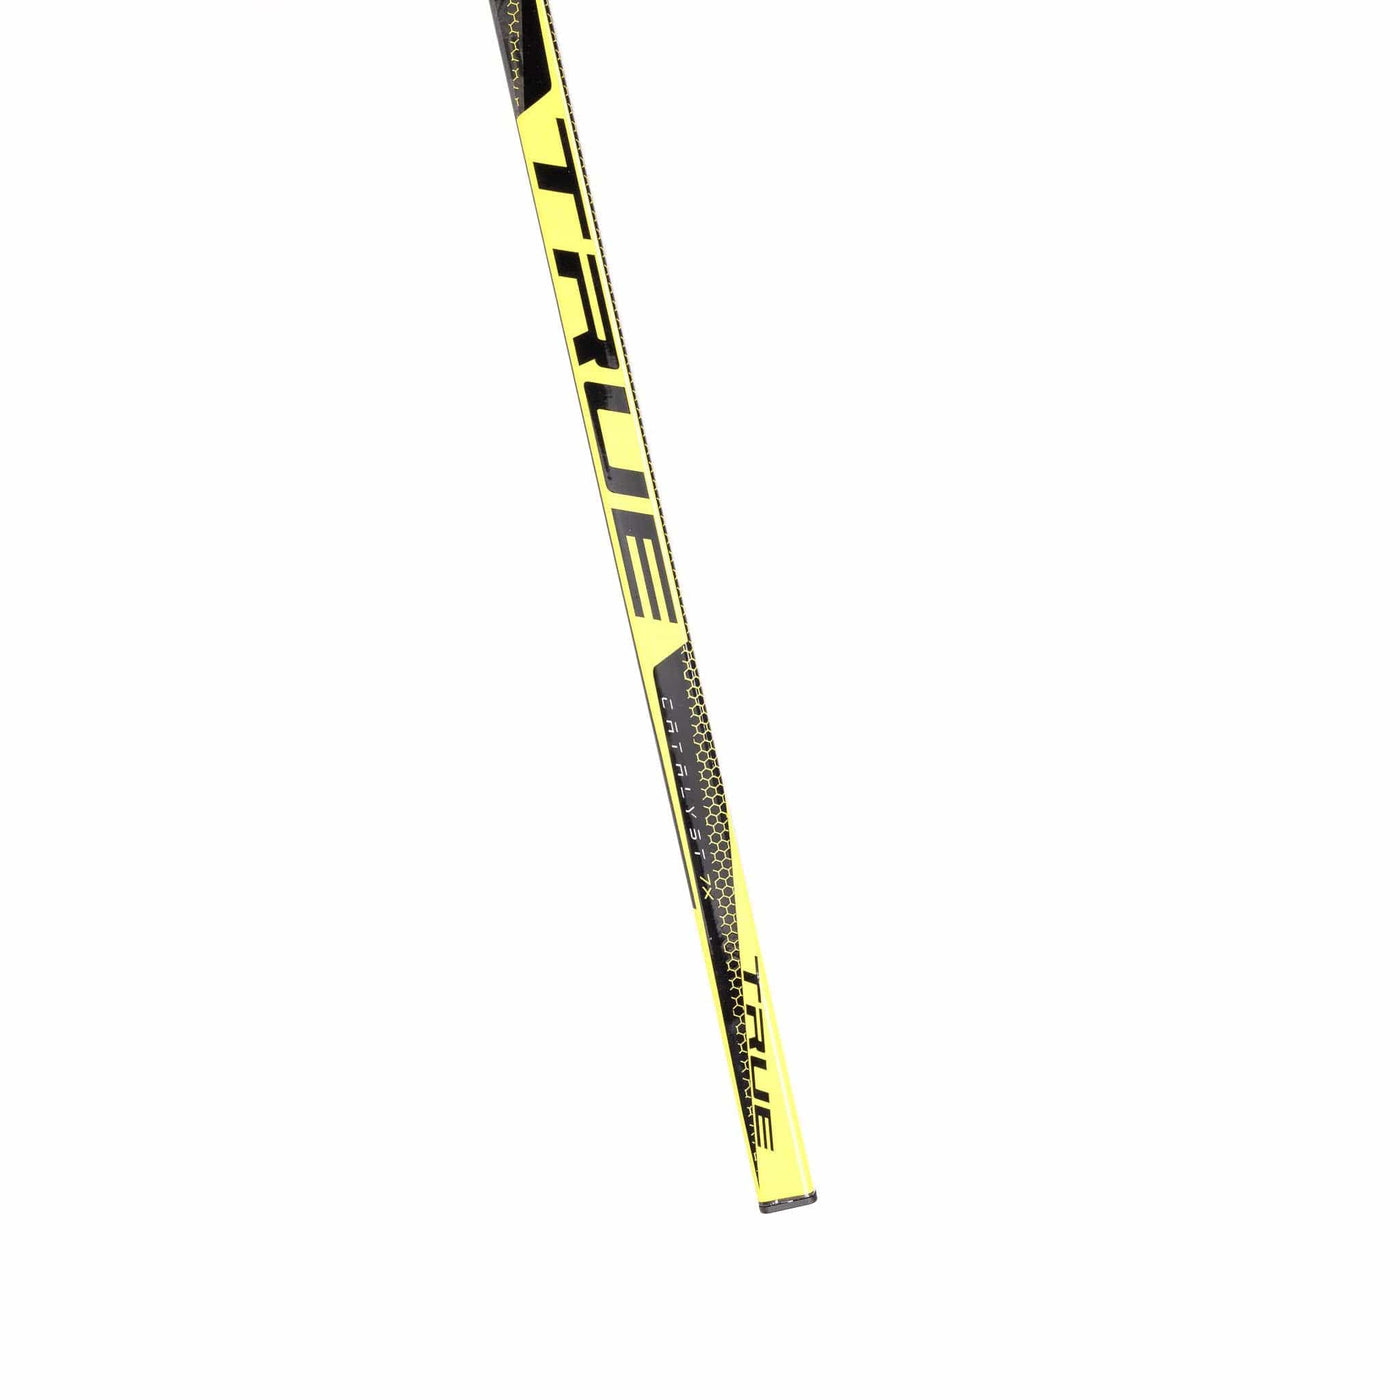 TRUE Catalyst 7X Senior Hockey Stick - Long - The Hockey Shop Source For Sports